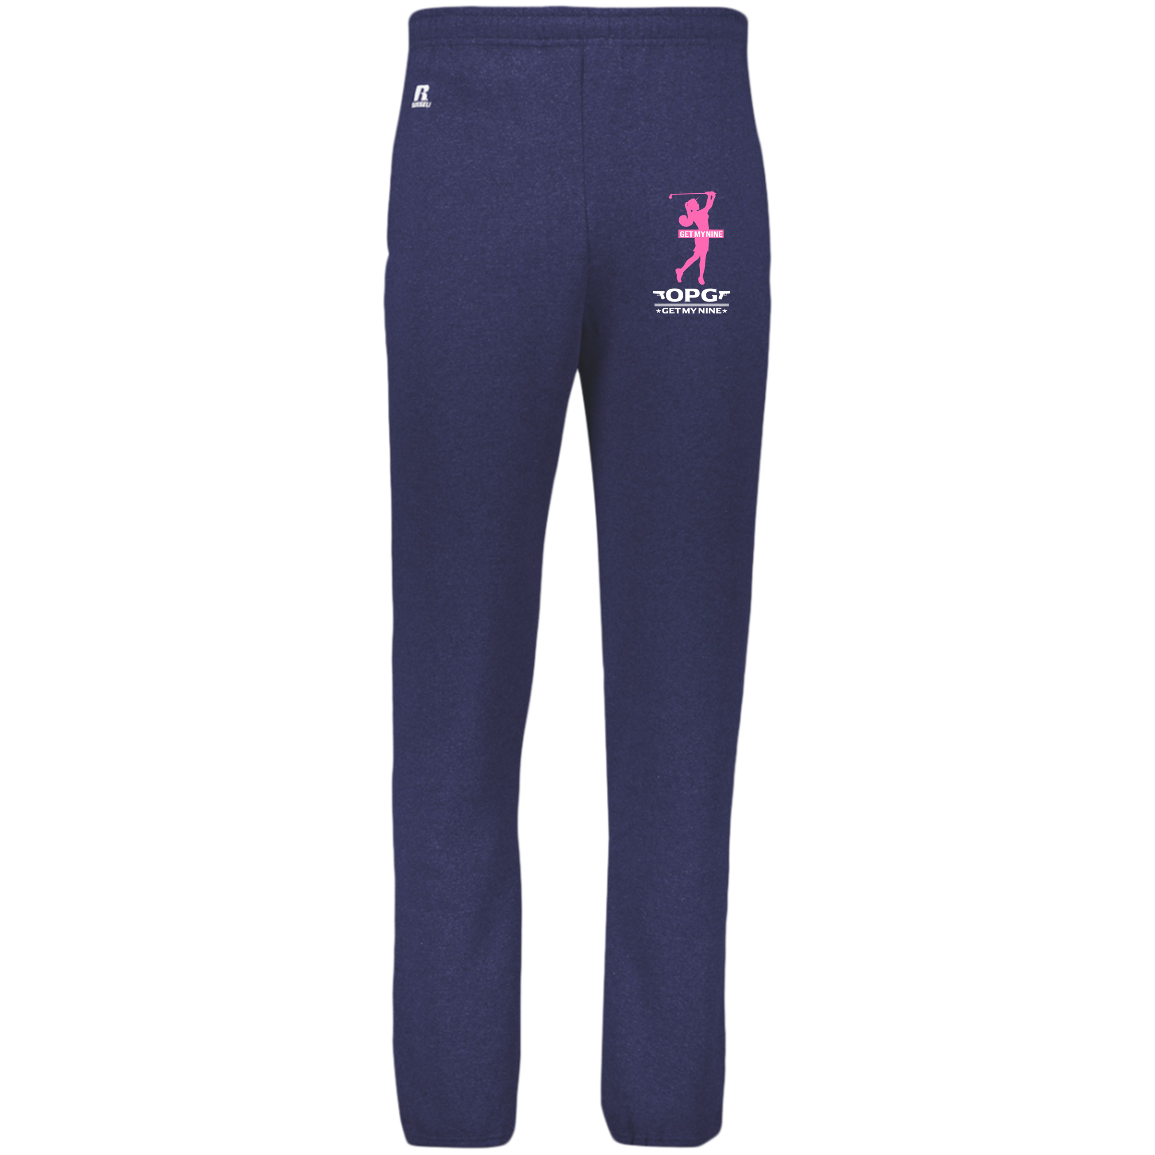 OPG Custom Design #16. Get My Nine. Female Version. Dri-Power Closed Bottom Pocket Sweatpants